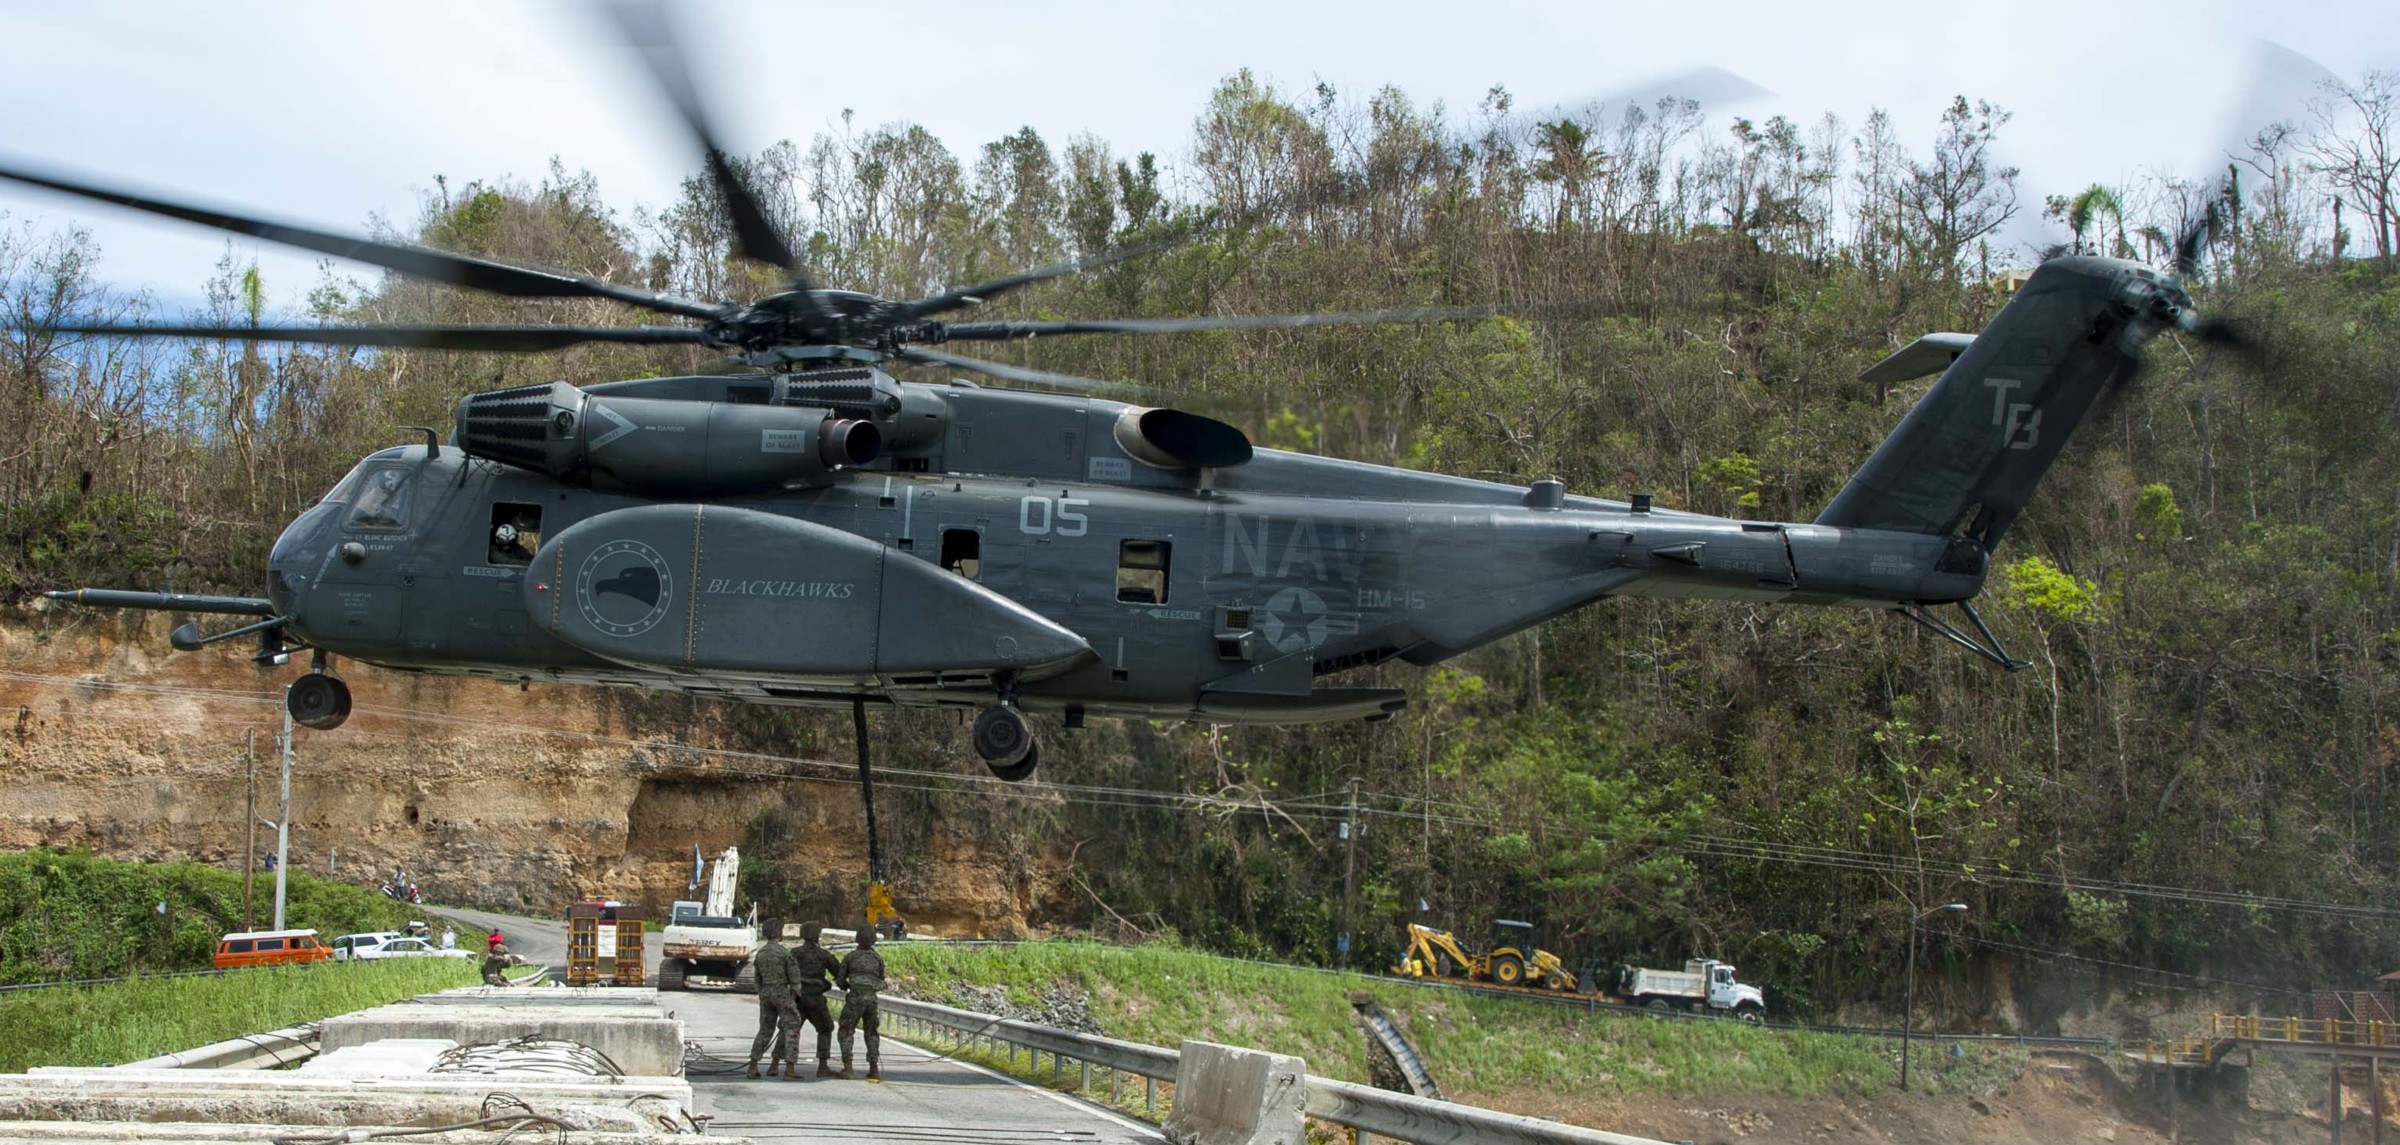 hm-15 blackhawks helicopter mine countermeasures squadron navy mh-53e sea dragon 11 quebradillas puerto rico